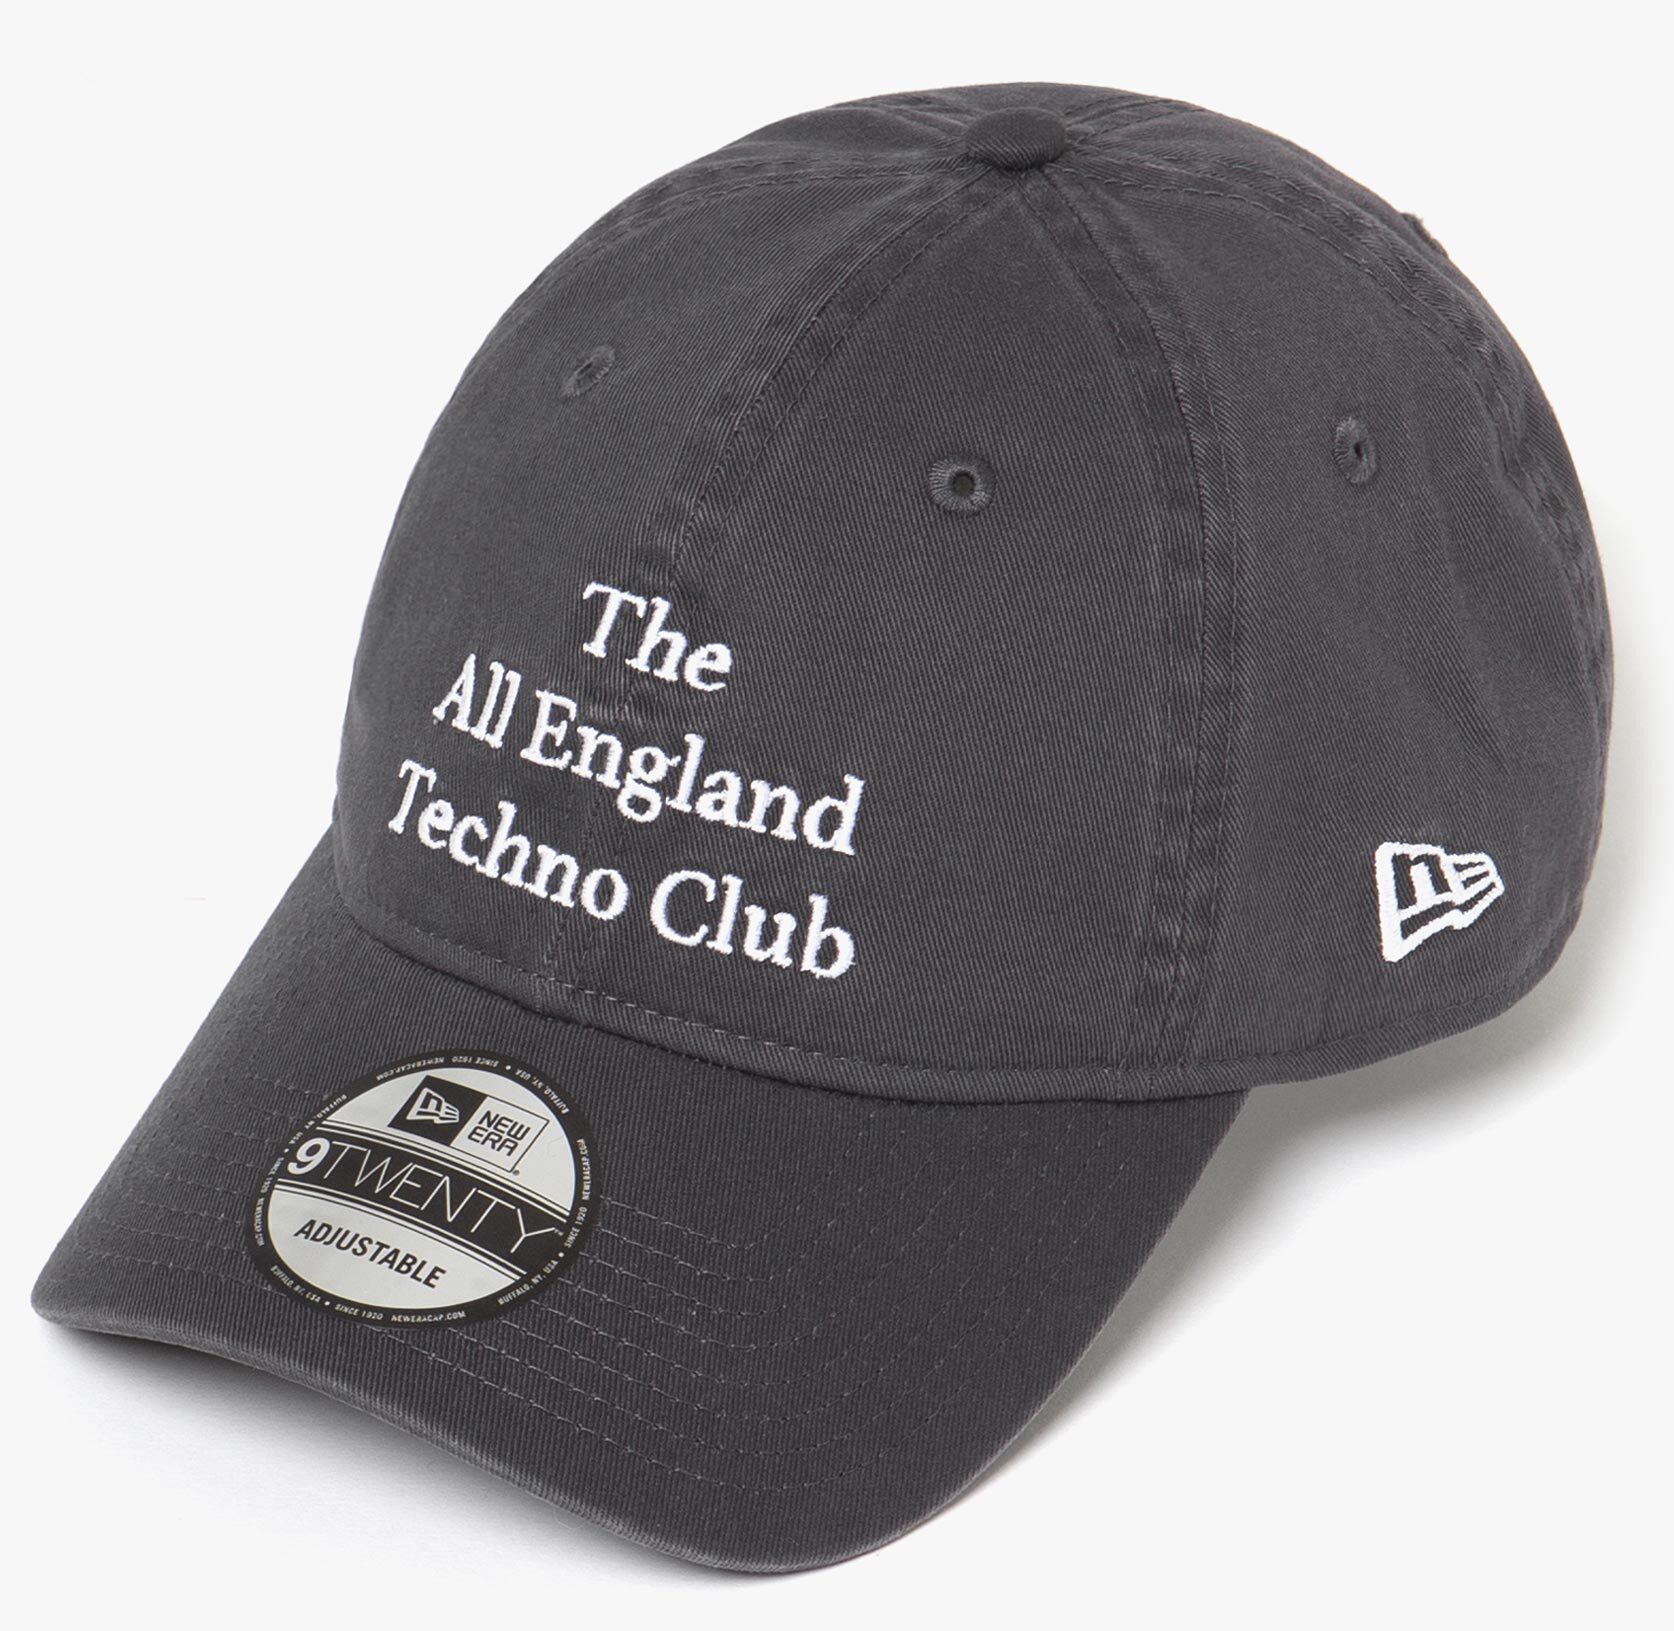 The All England Techno Club Cap